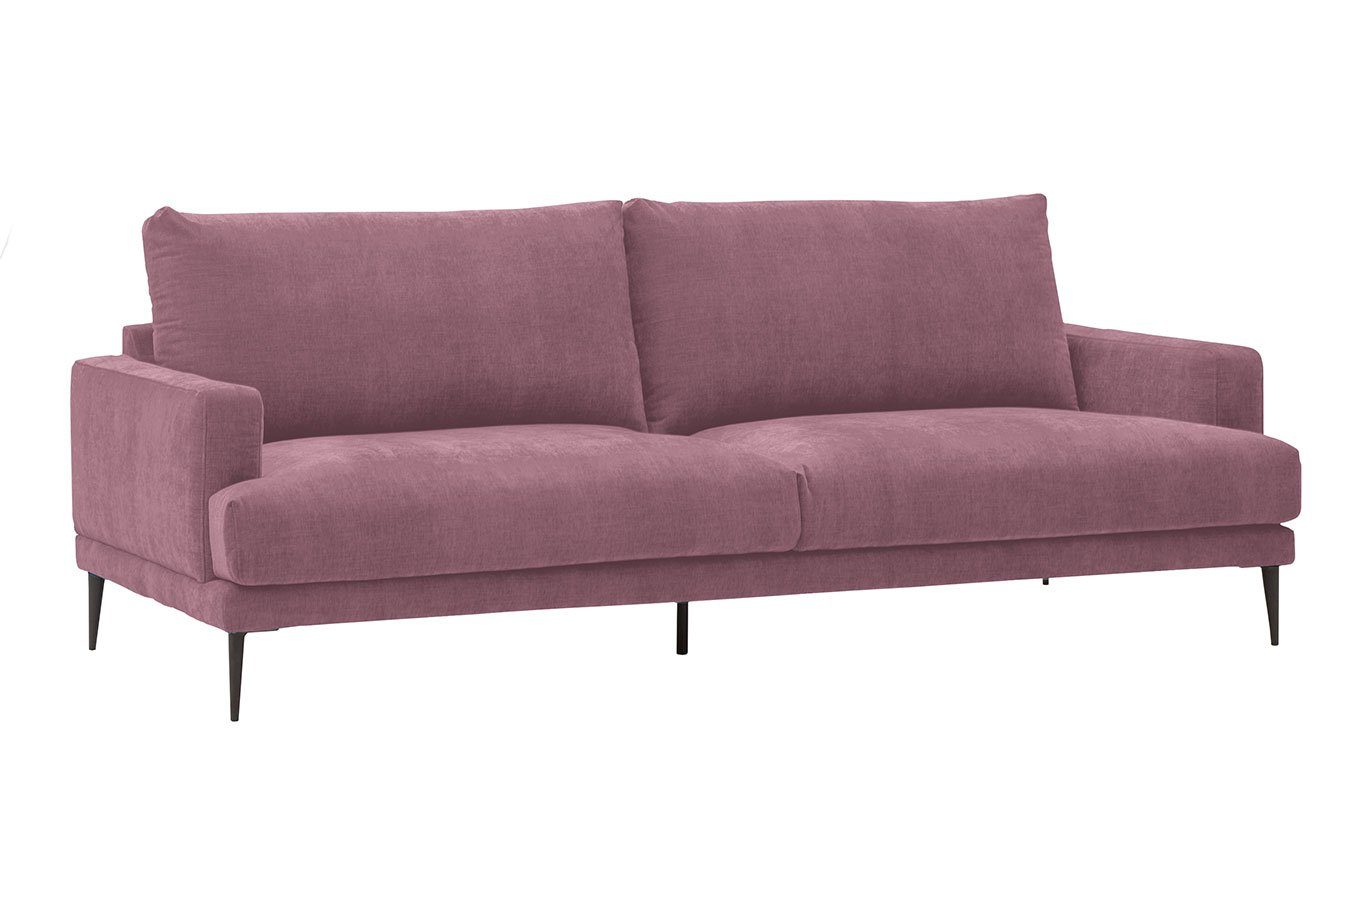 Big-Sofa daslagerhaus Duck pink 3-Sitzer XL living Stoff